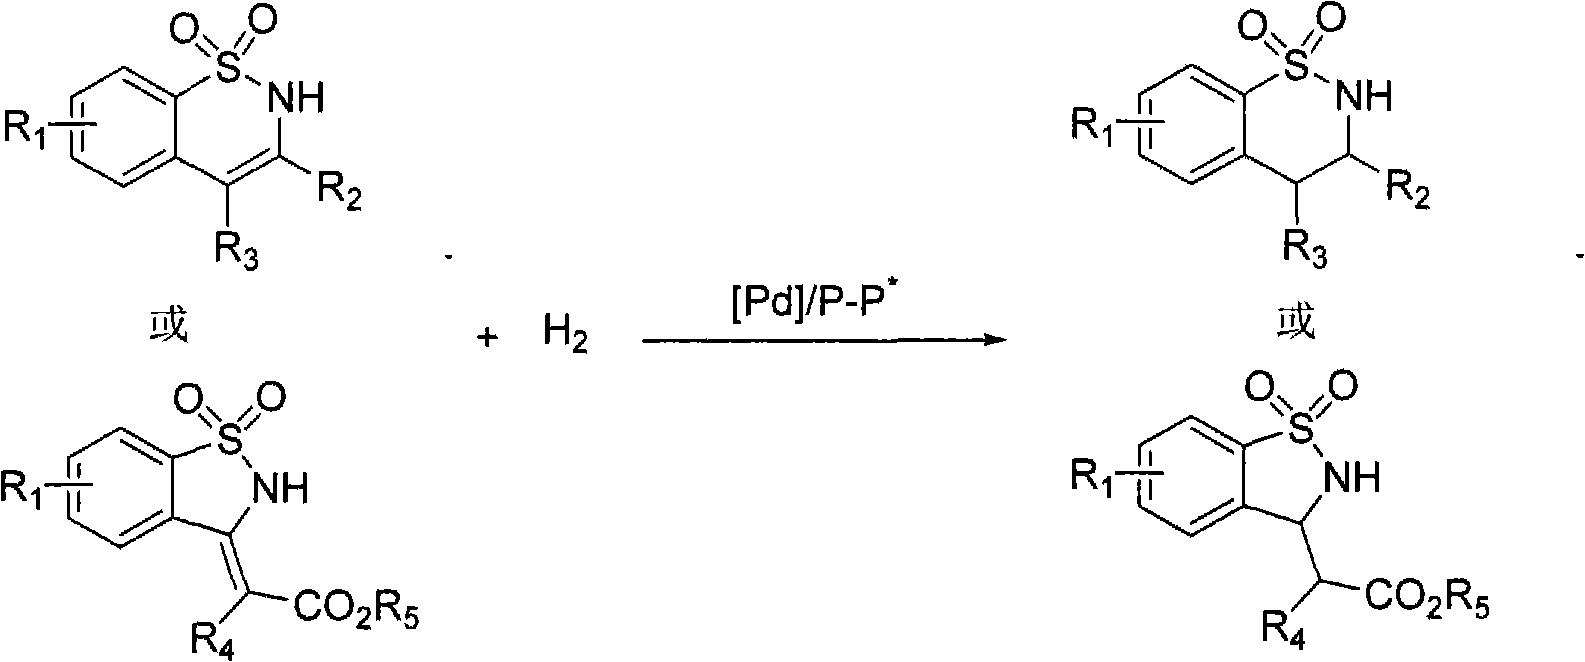 Method for synthesizing chiral benzosultam via palladium-catalytic asymmetric hydrogenation